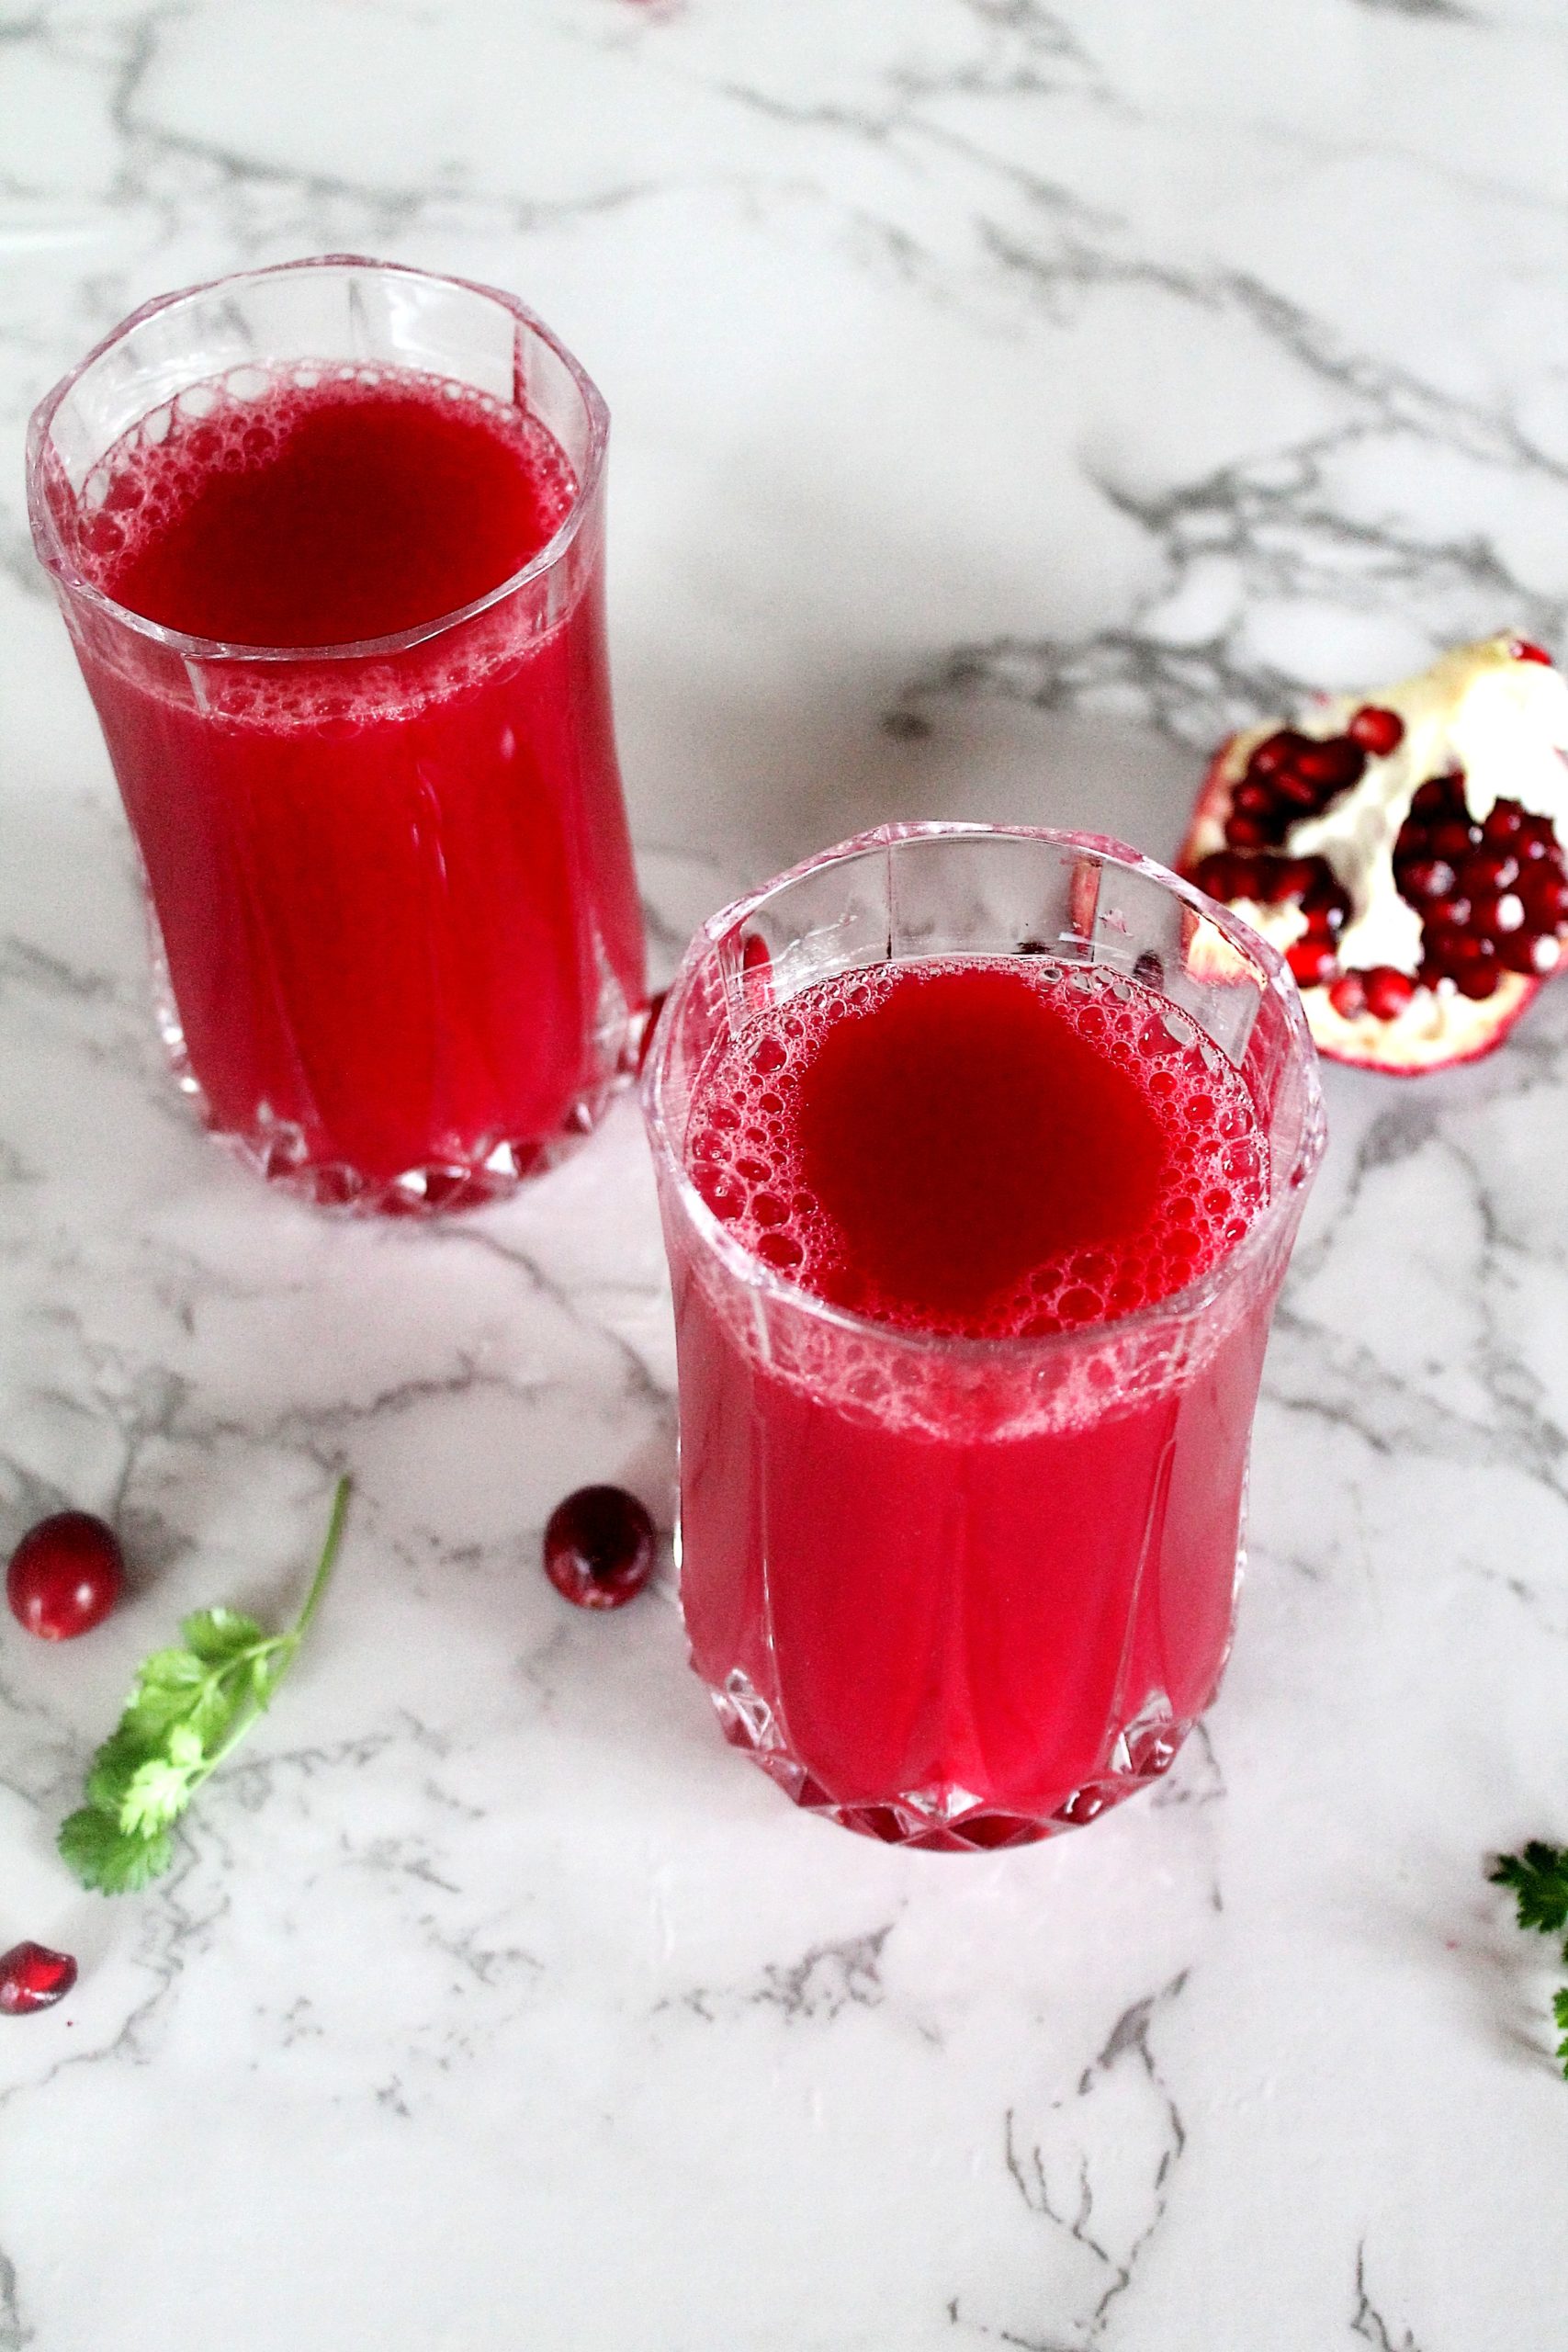 https://www.livingsmartandhealthy.com/wp-content/uploads/2020/11/Homemade-Cranberry-Pomegranate-Juice5-scaled.jpg